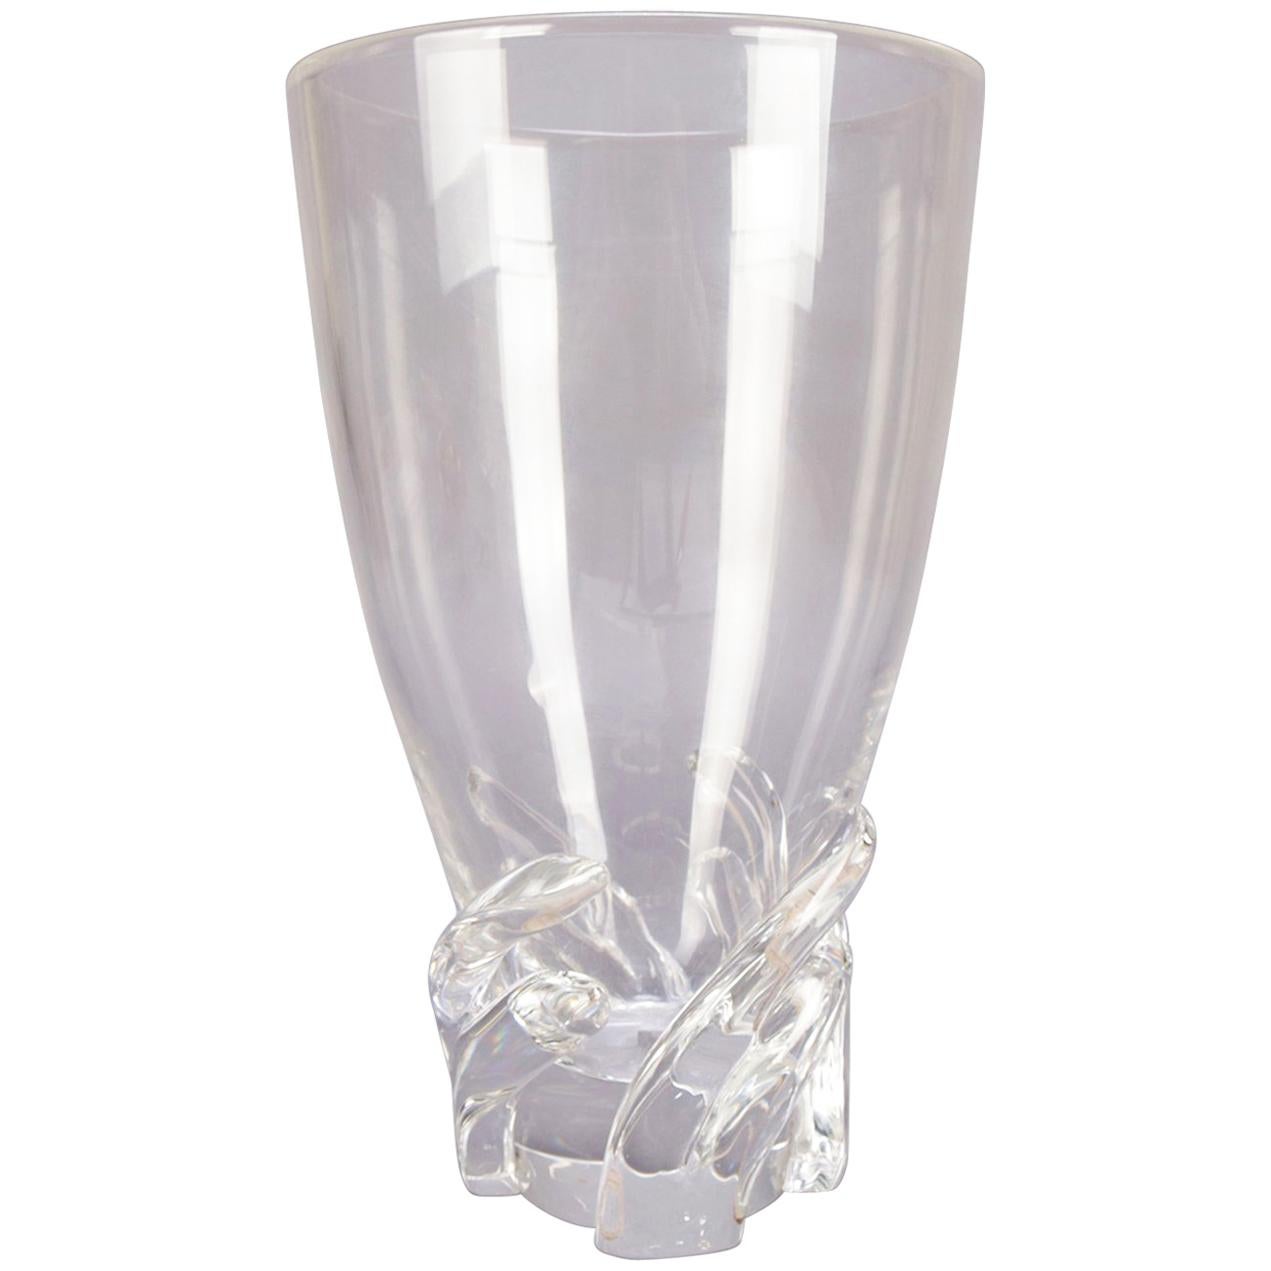 Oversized Steuben Crystal Phoenix Vase #8036, Signed, 20th Century